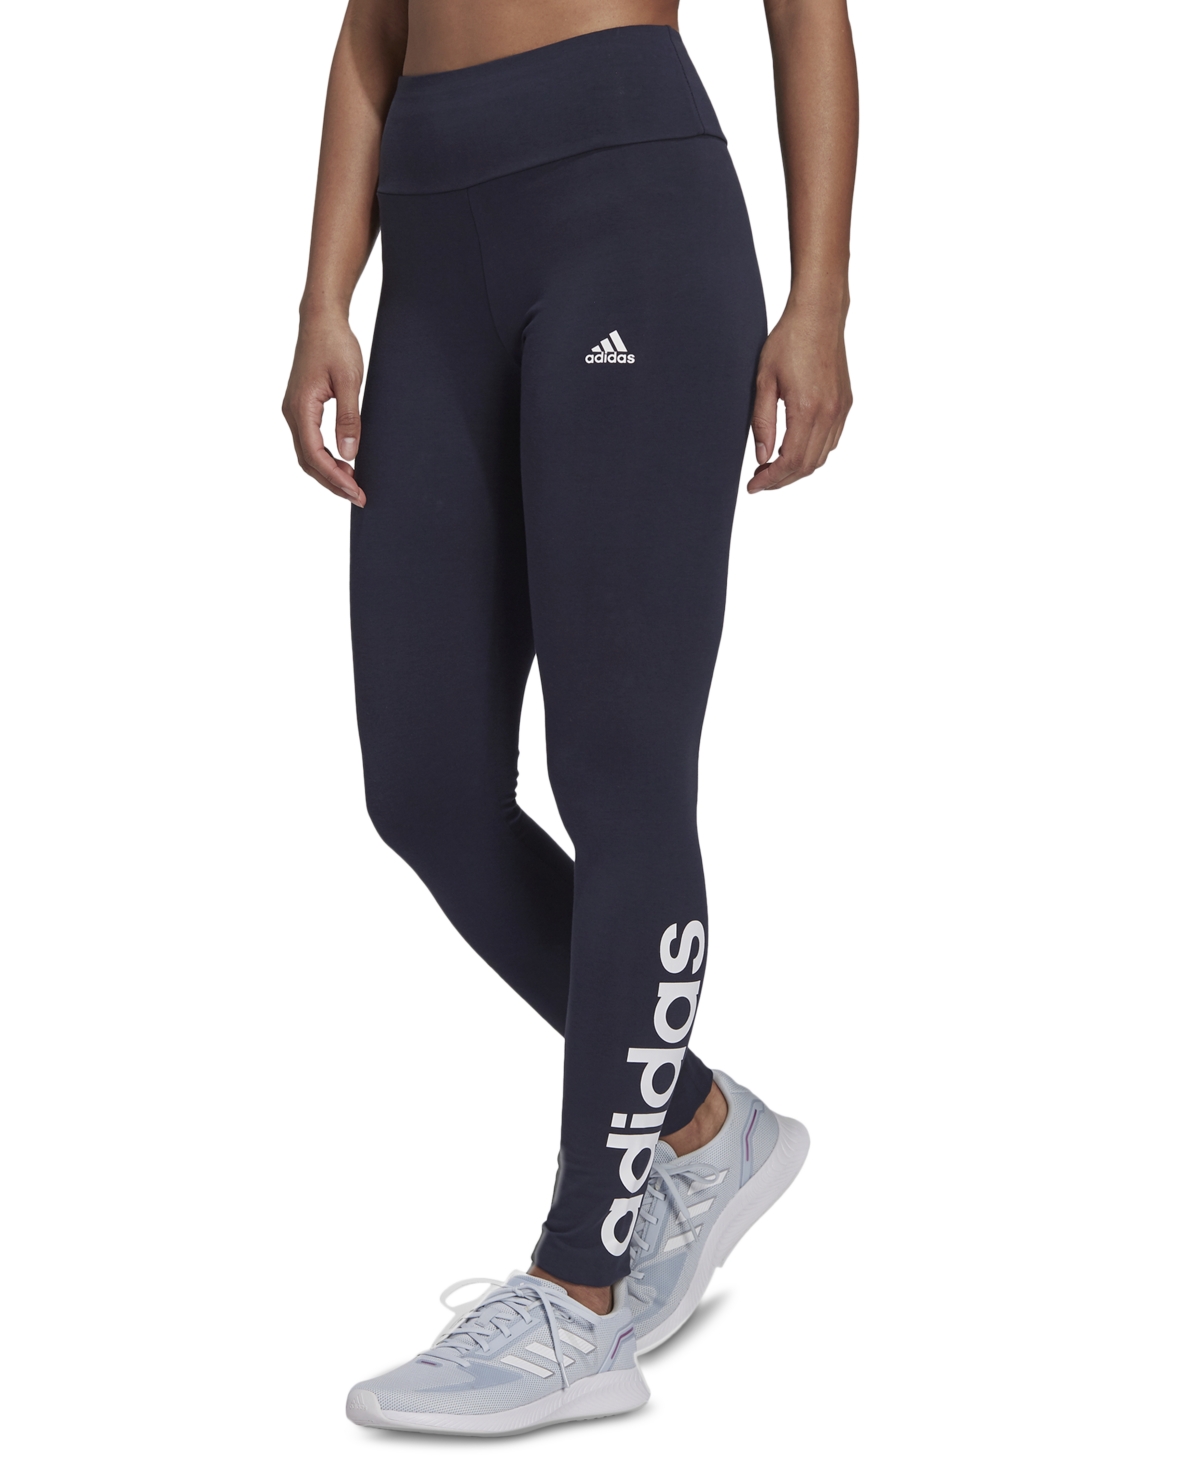  adidas Women's Linear-Logo Full Length Leggings, Xs-4X